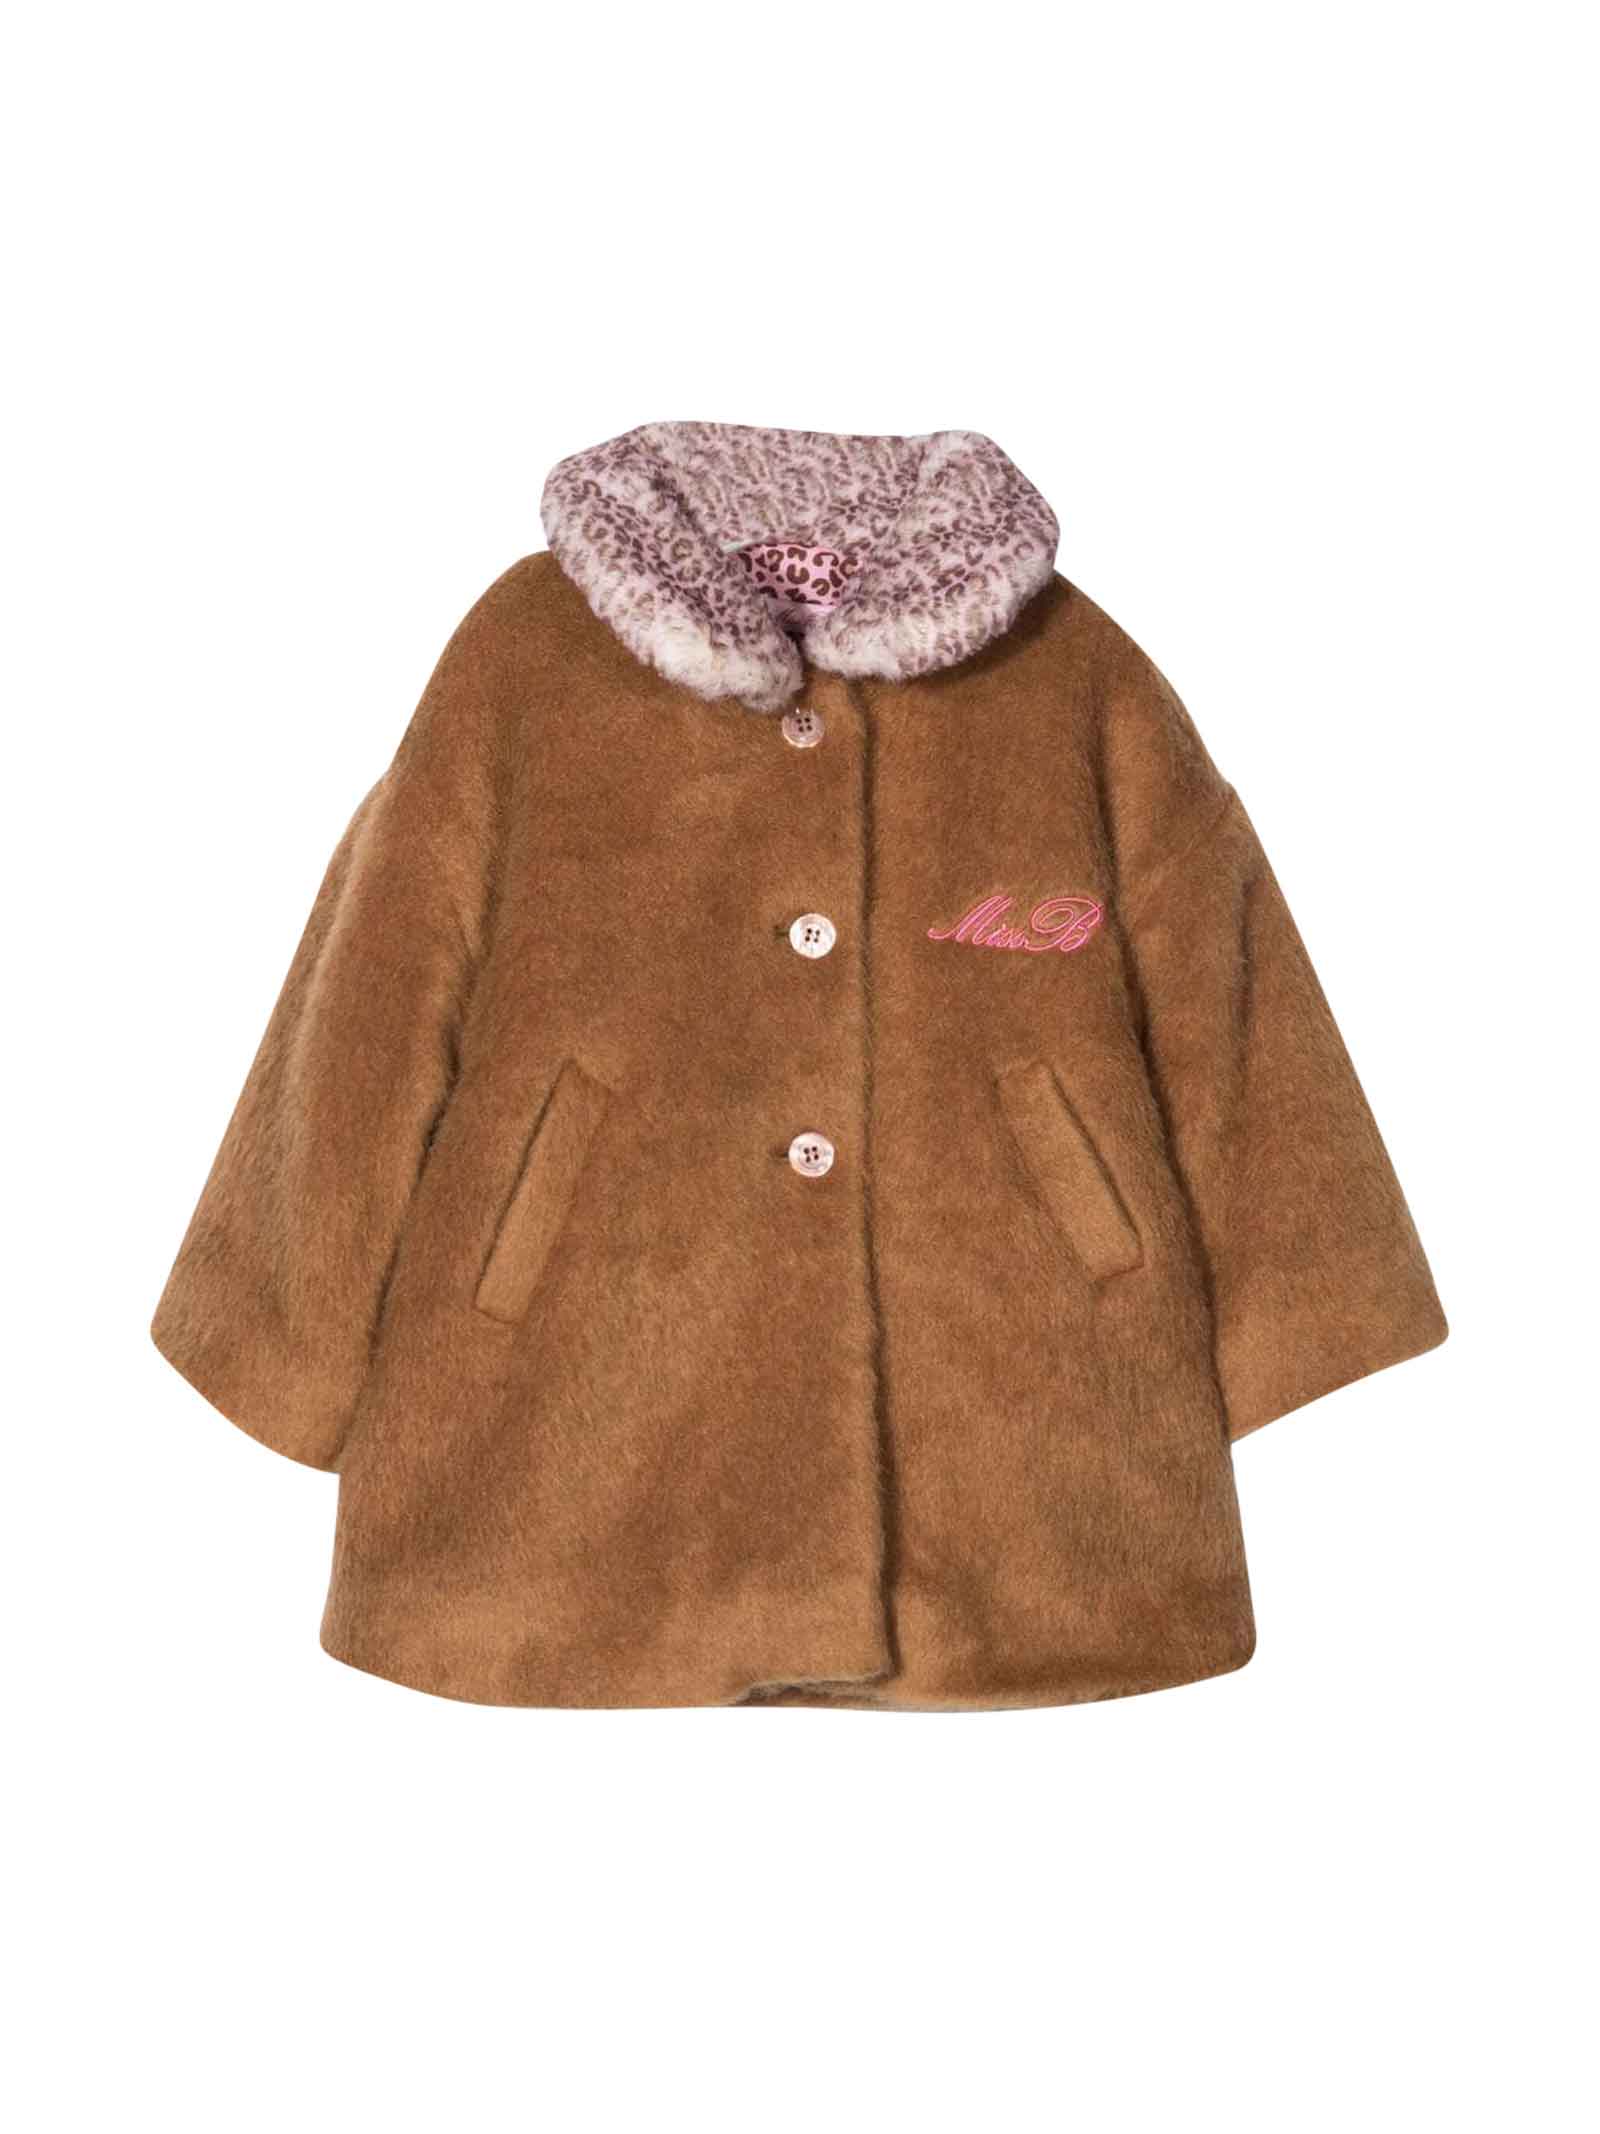 Miss Blumarine Baby Girl Brown Coat